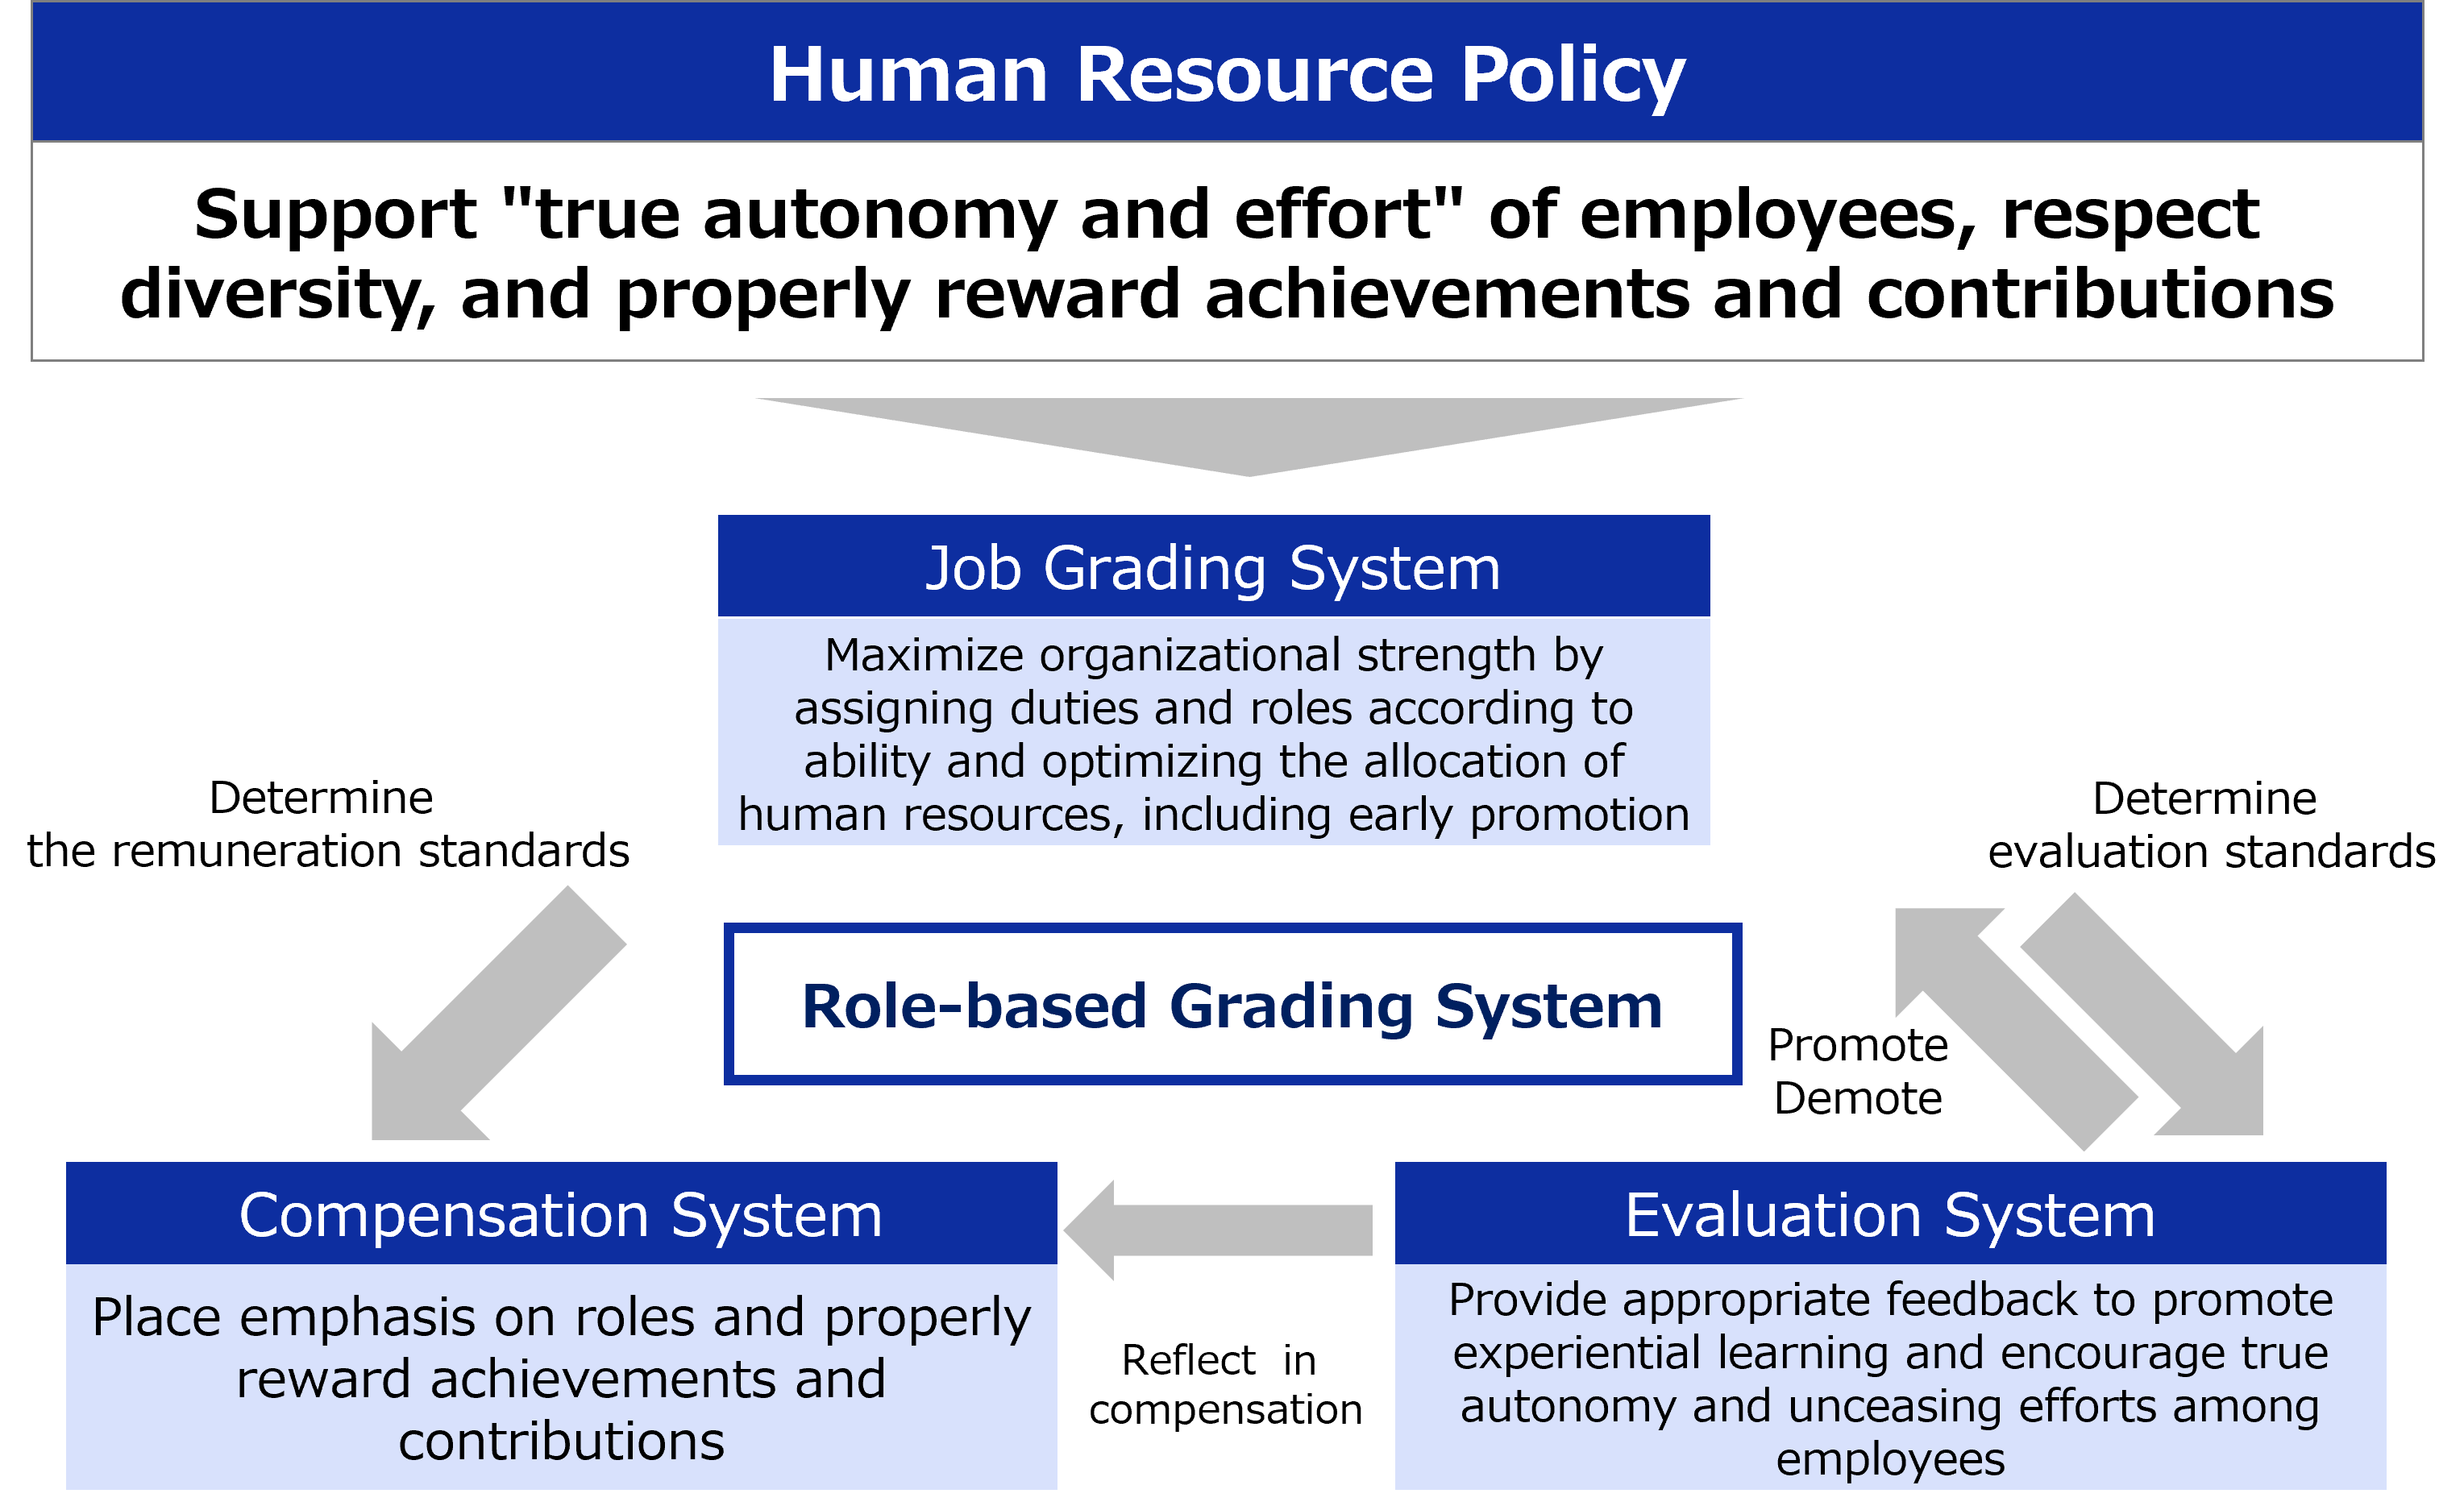 Role-based grading system